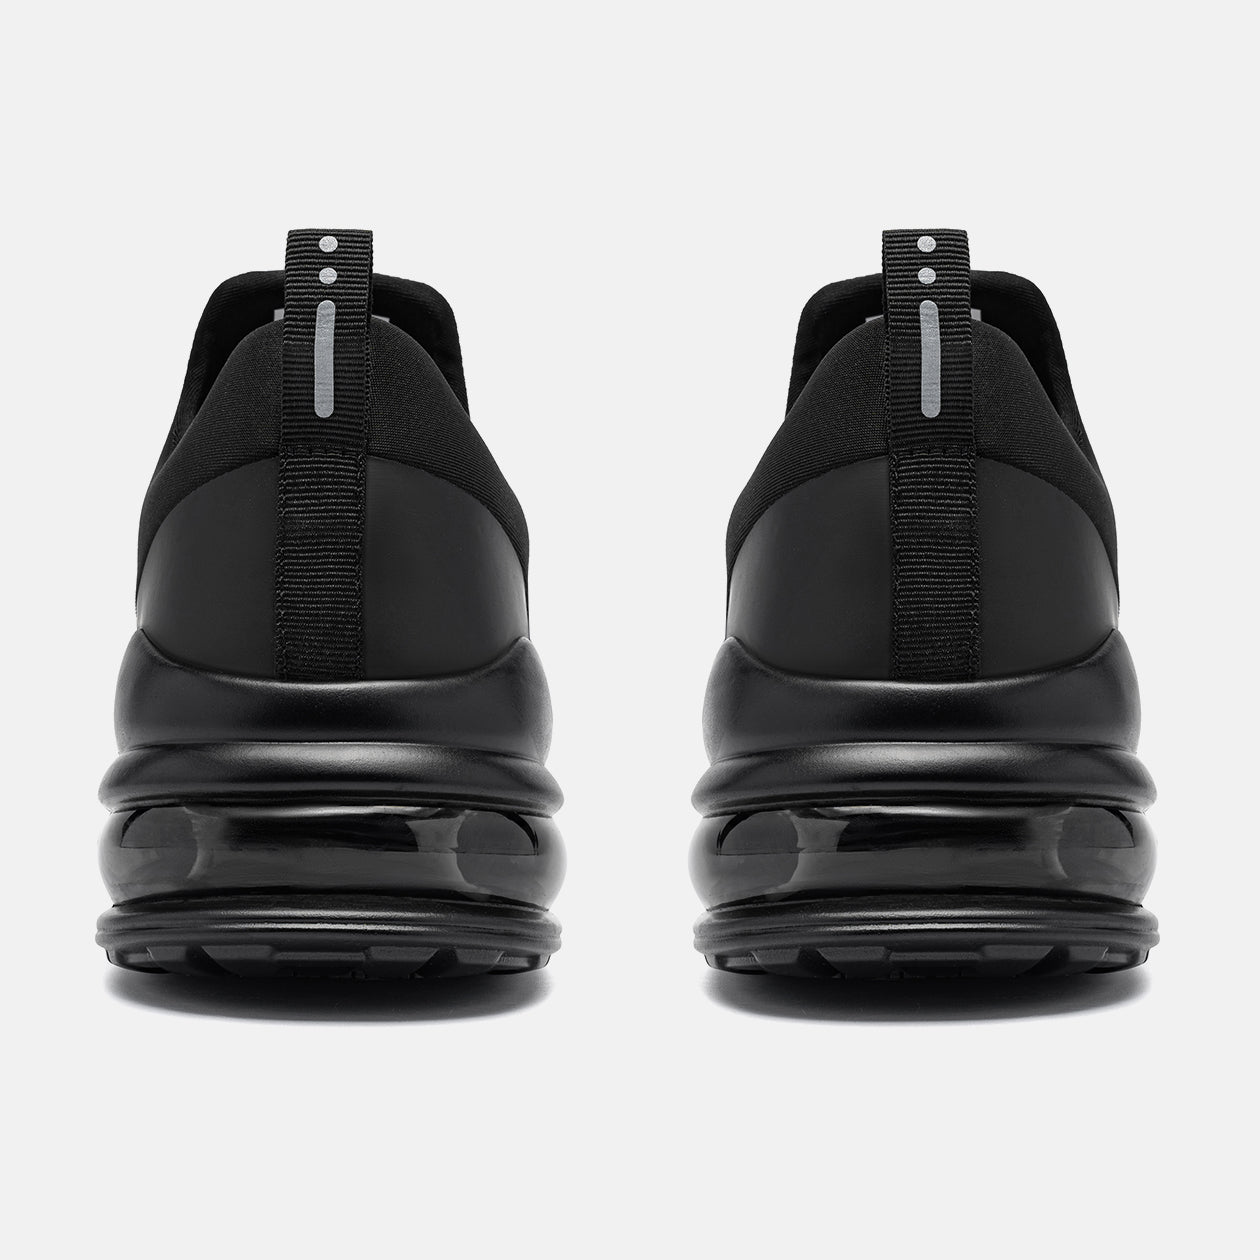 LARNMERN Slip On Work Shoes Non Slip Waterproof Work Shoes For Men,#21059